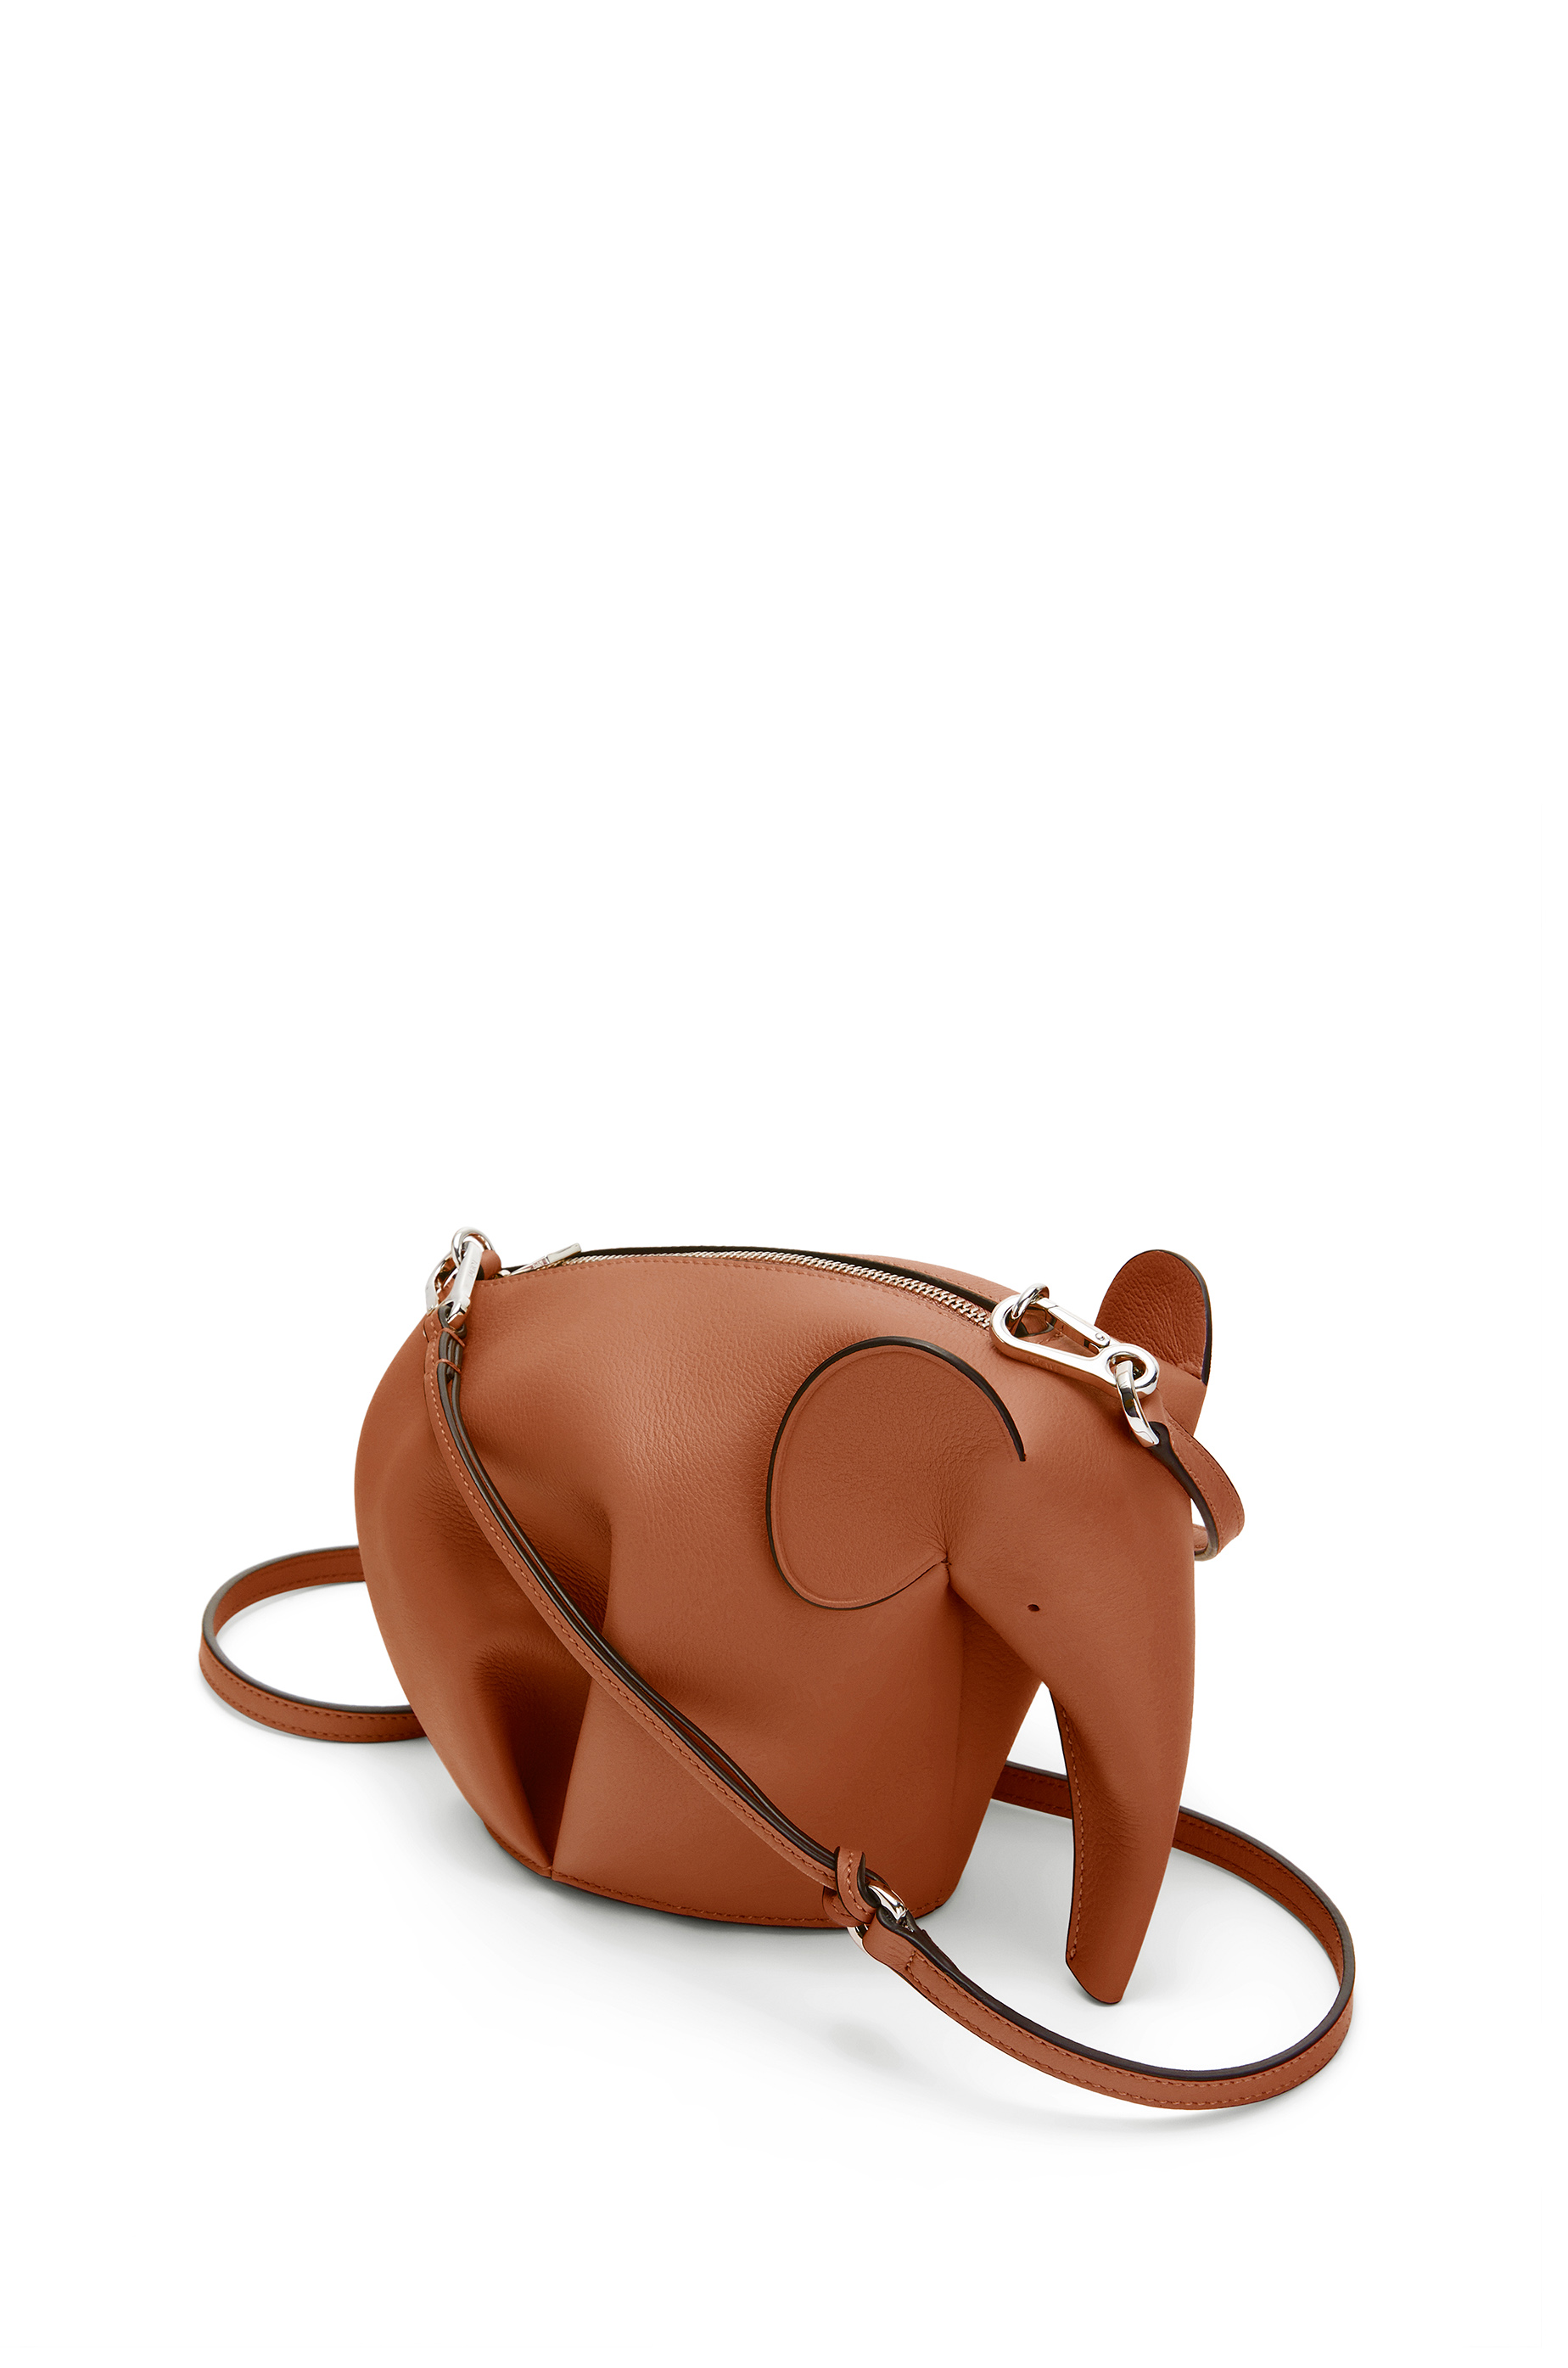 loewe elephant bag price